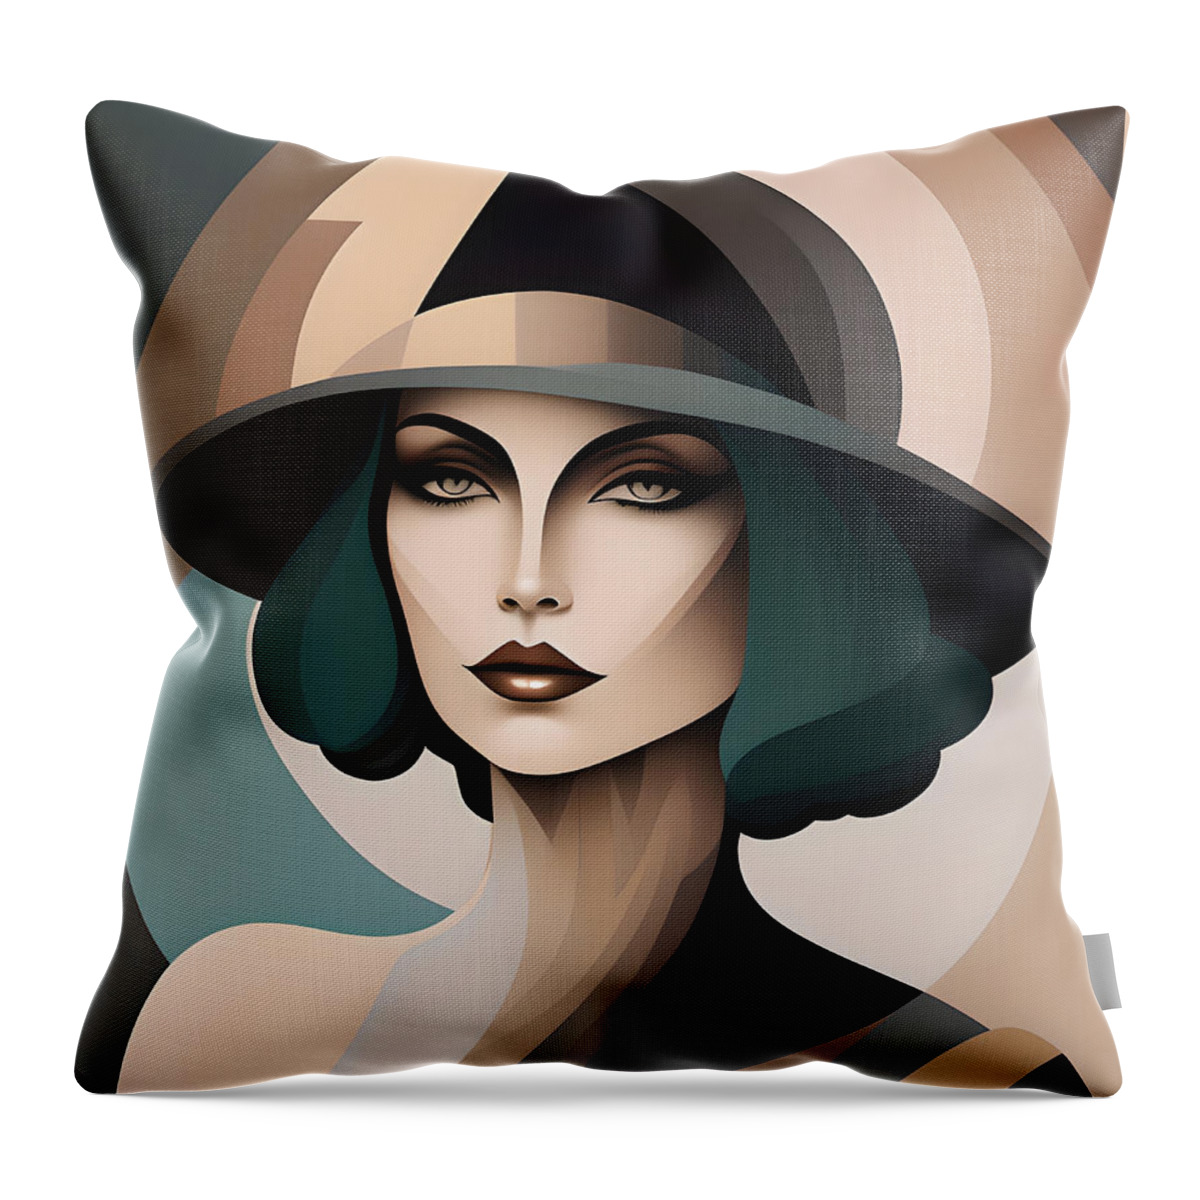 Portrait Throw Pillow featuring the digital art Dark Elements Woman With Hat Portrait 7 by Philip Preston